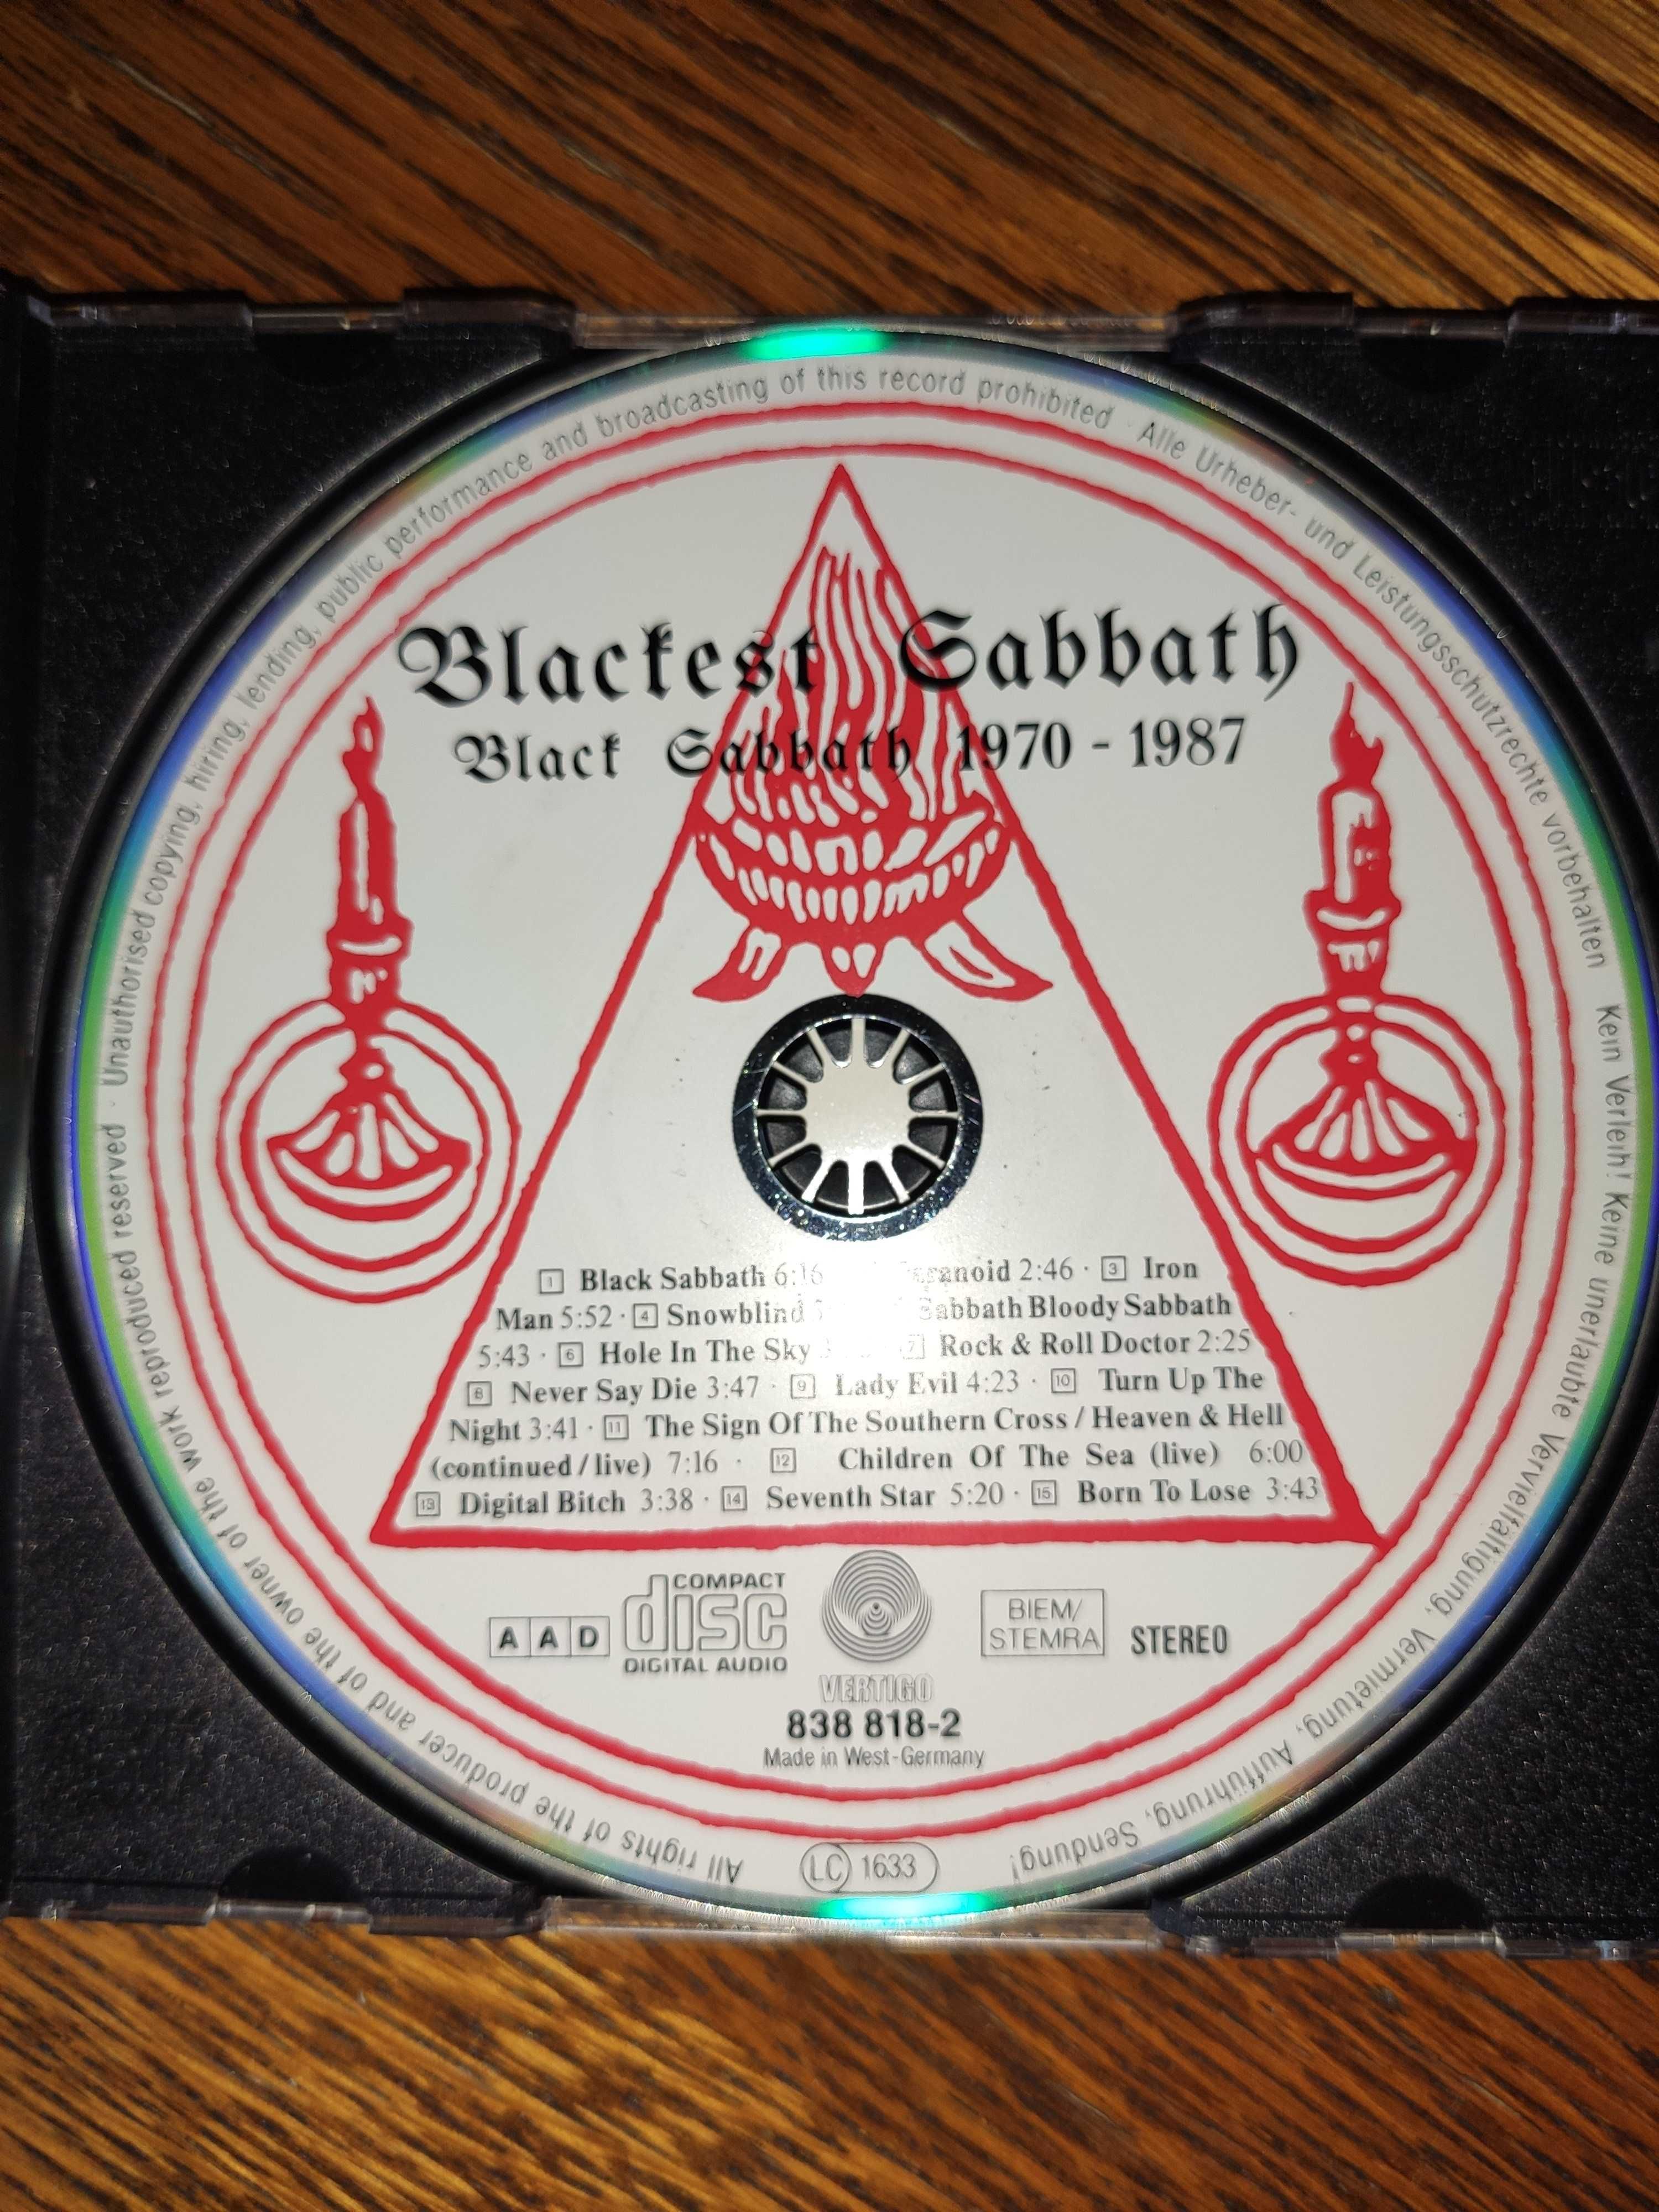 Black Sabbath - Blackest Sabbath 1970 - 1987, CD 1989, W-Ger